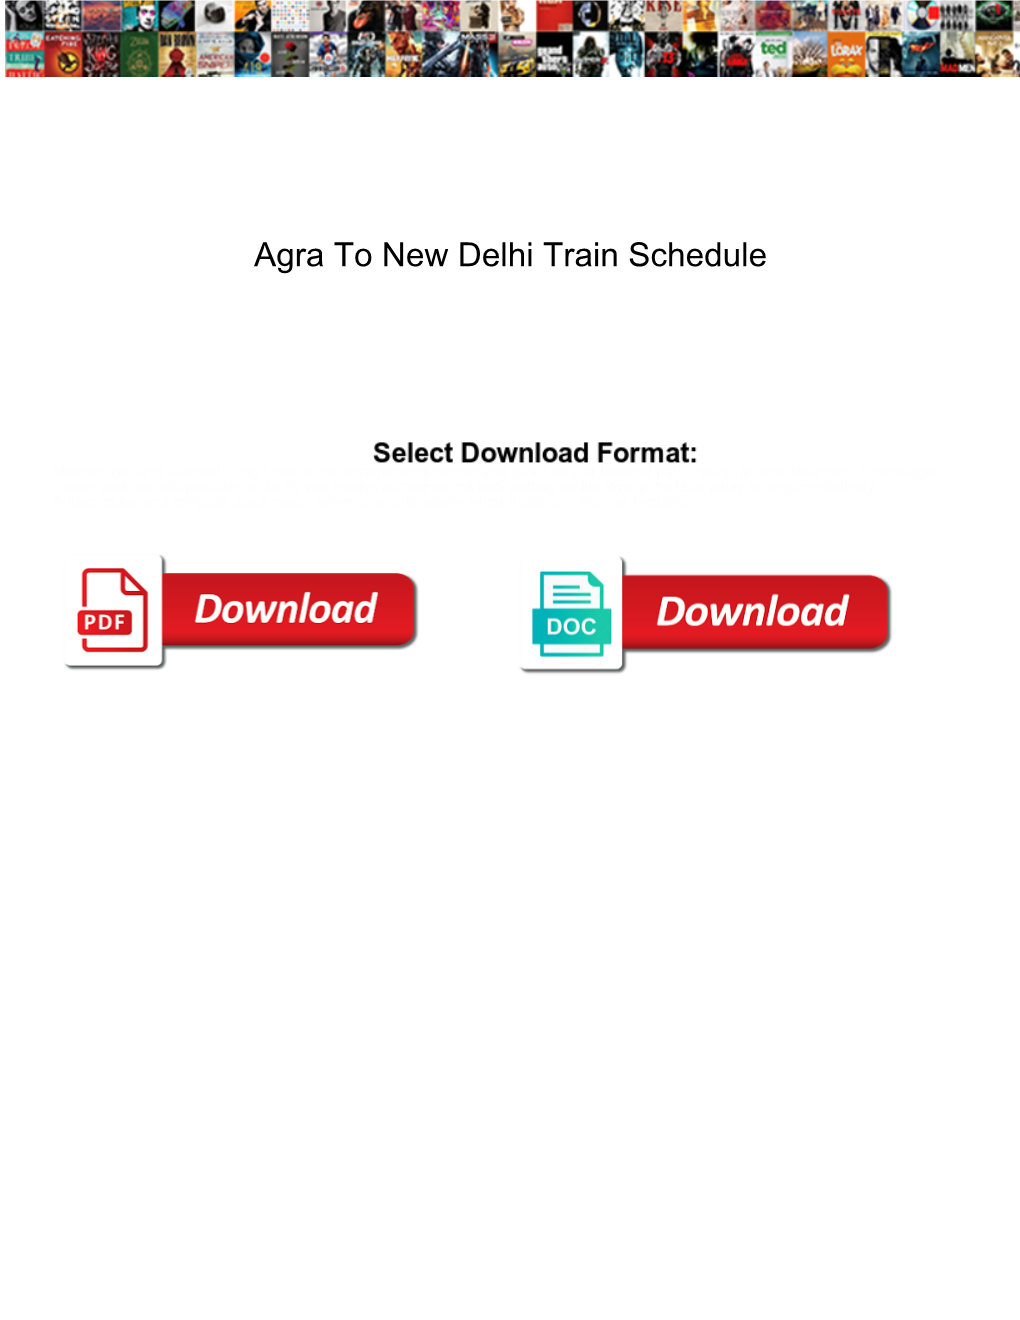 Agra to New Delhi Train Schedule